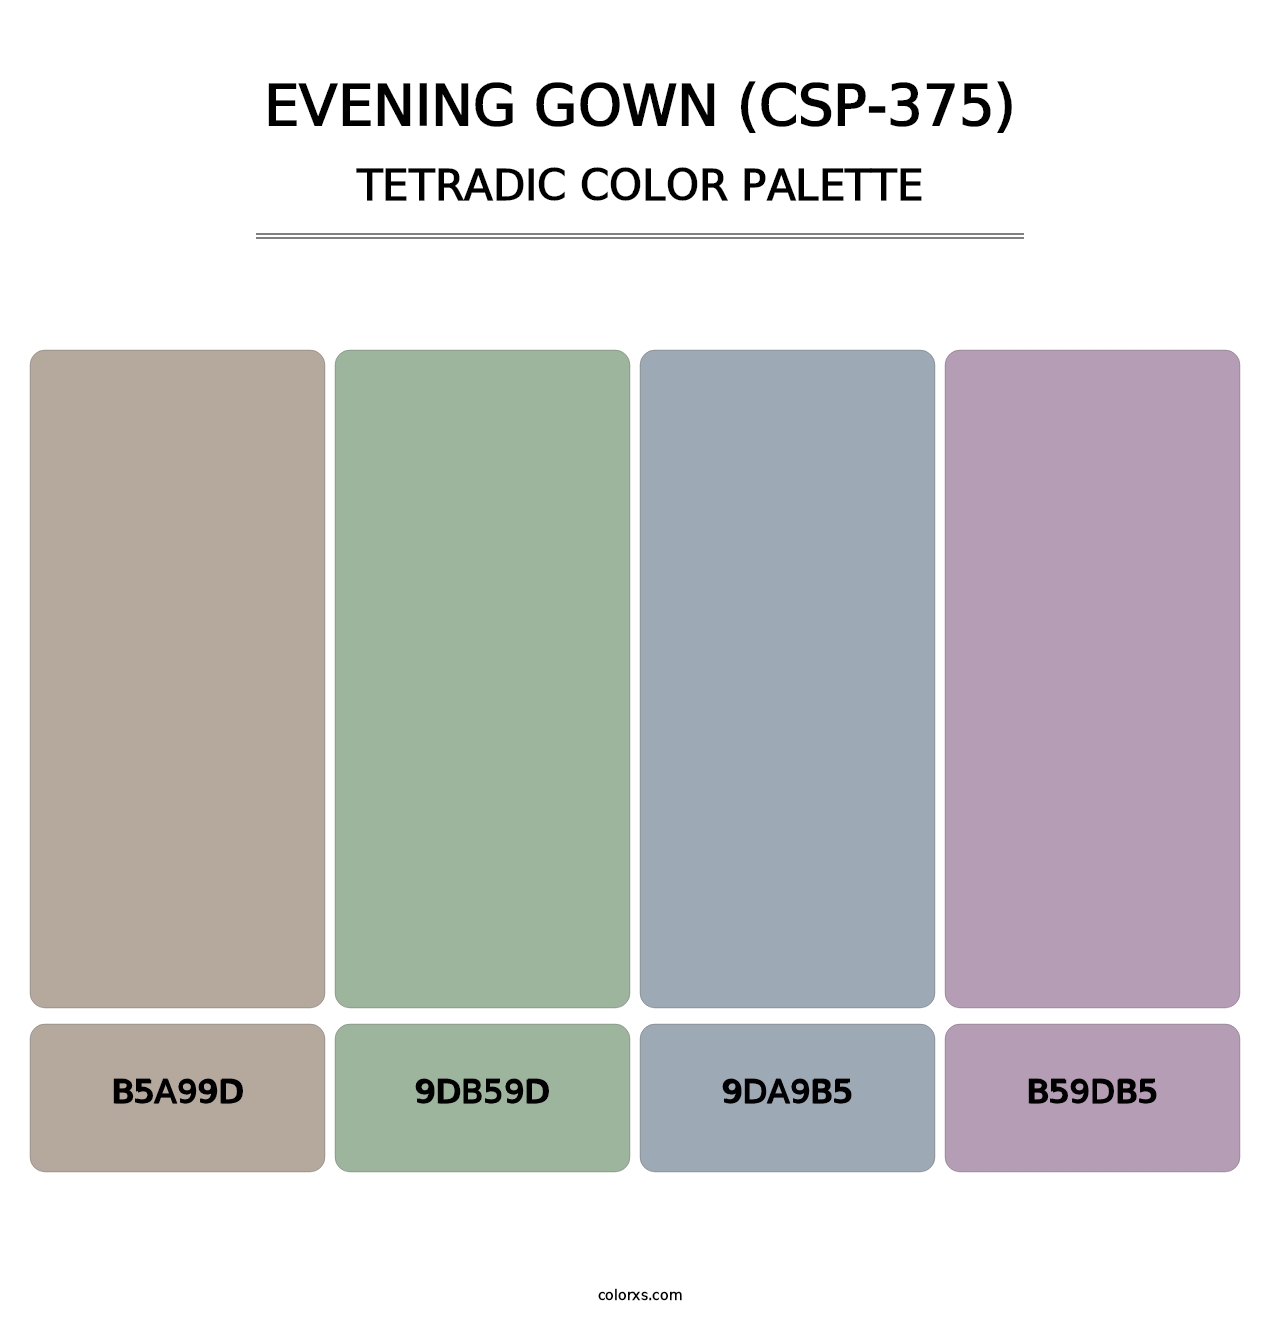 Evening Gown (CSP-375) - Tetradic Color Palette